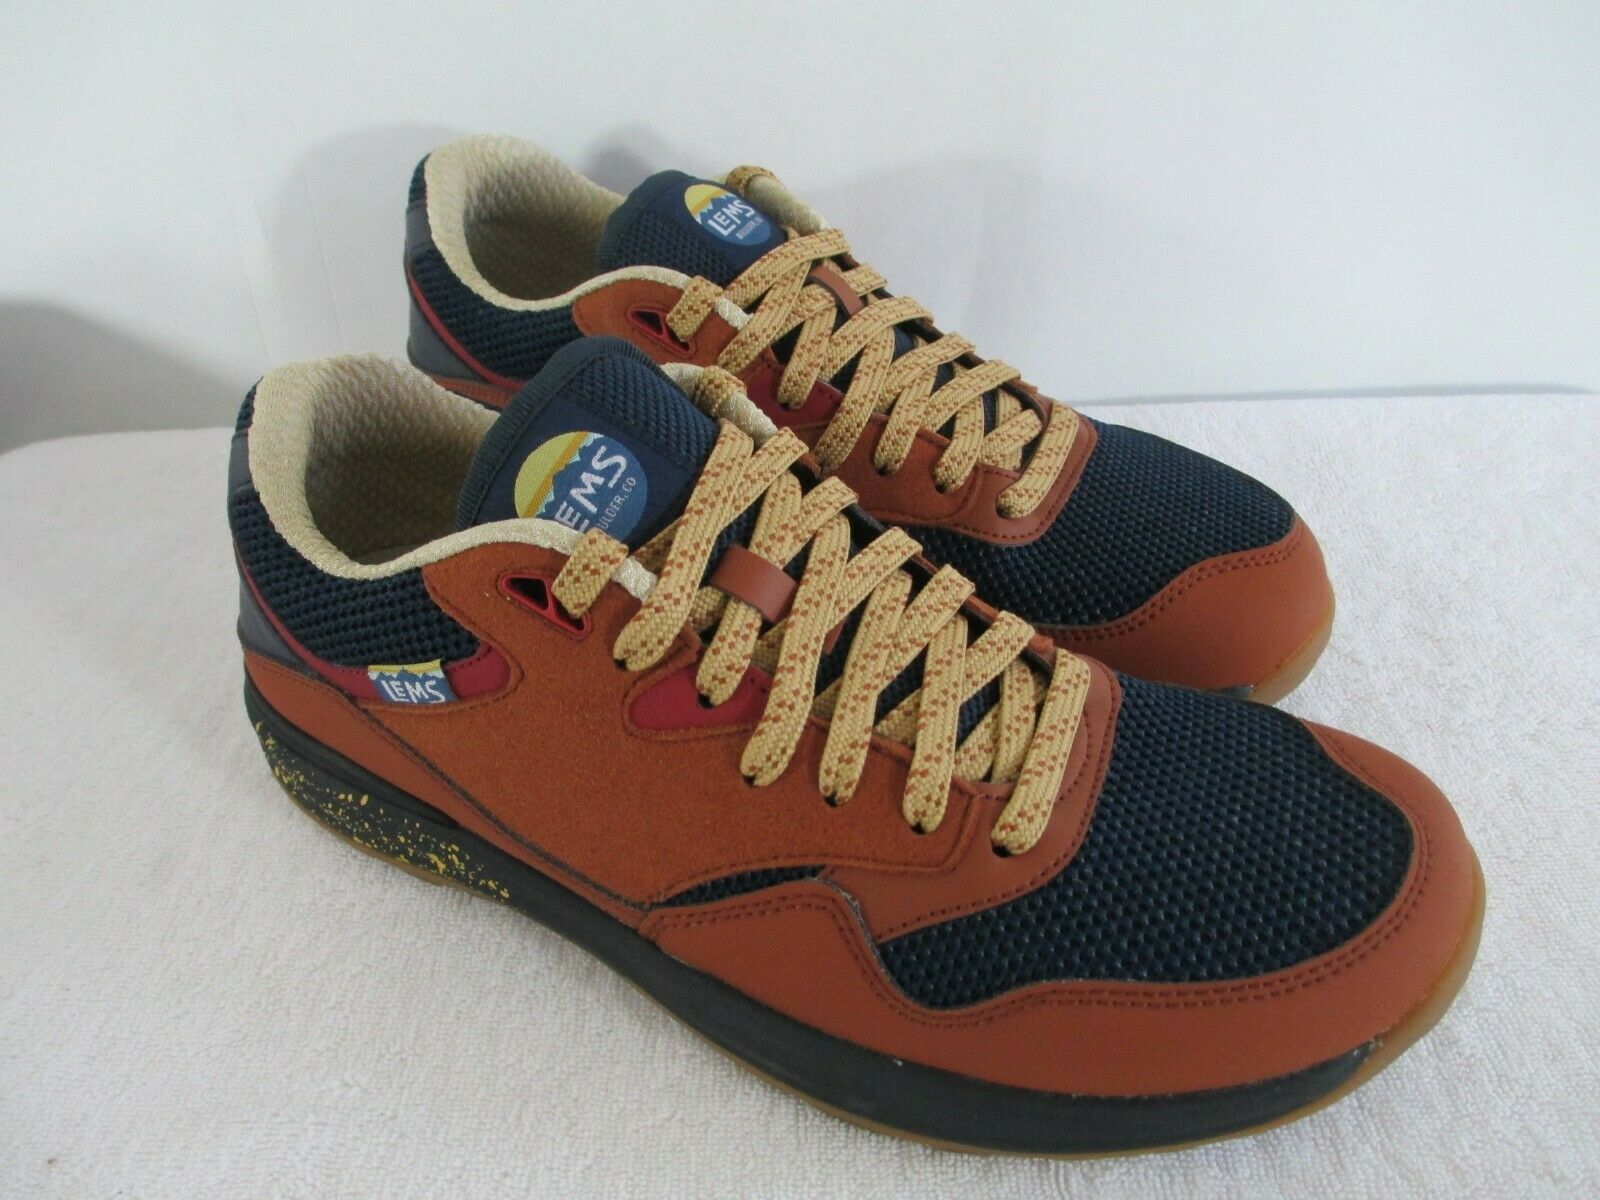 LEMS Trailhead Women's Size 9.5 B Trail Hiking Shoes in Sequoia Style LEMS 81W-0